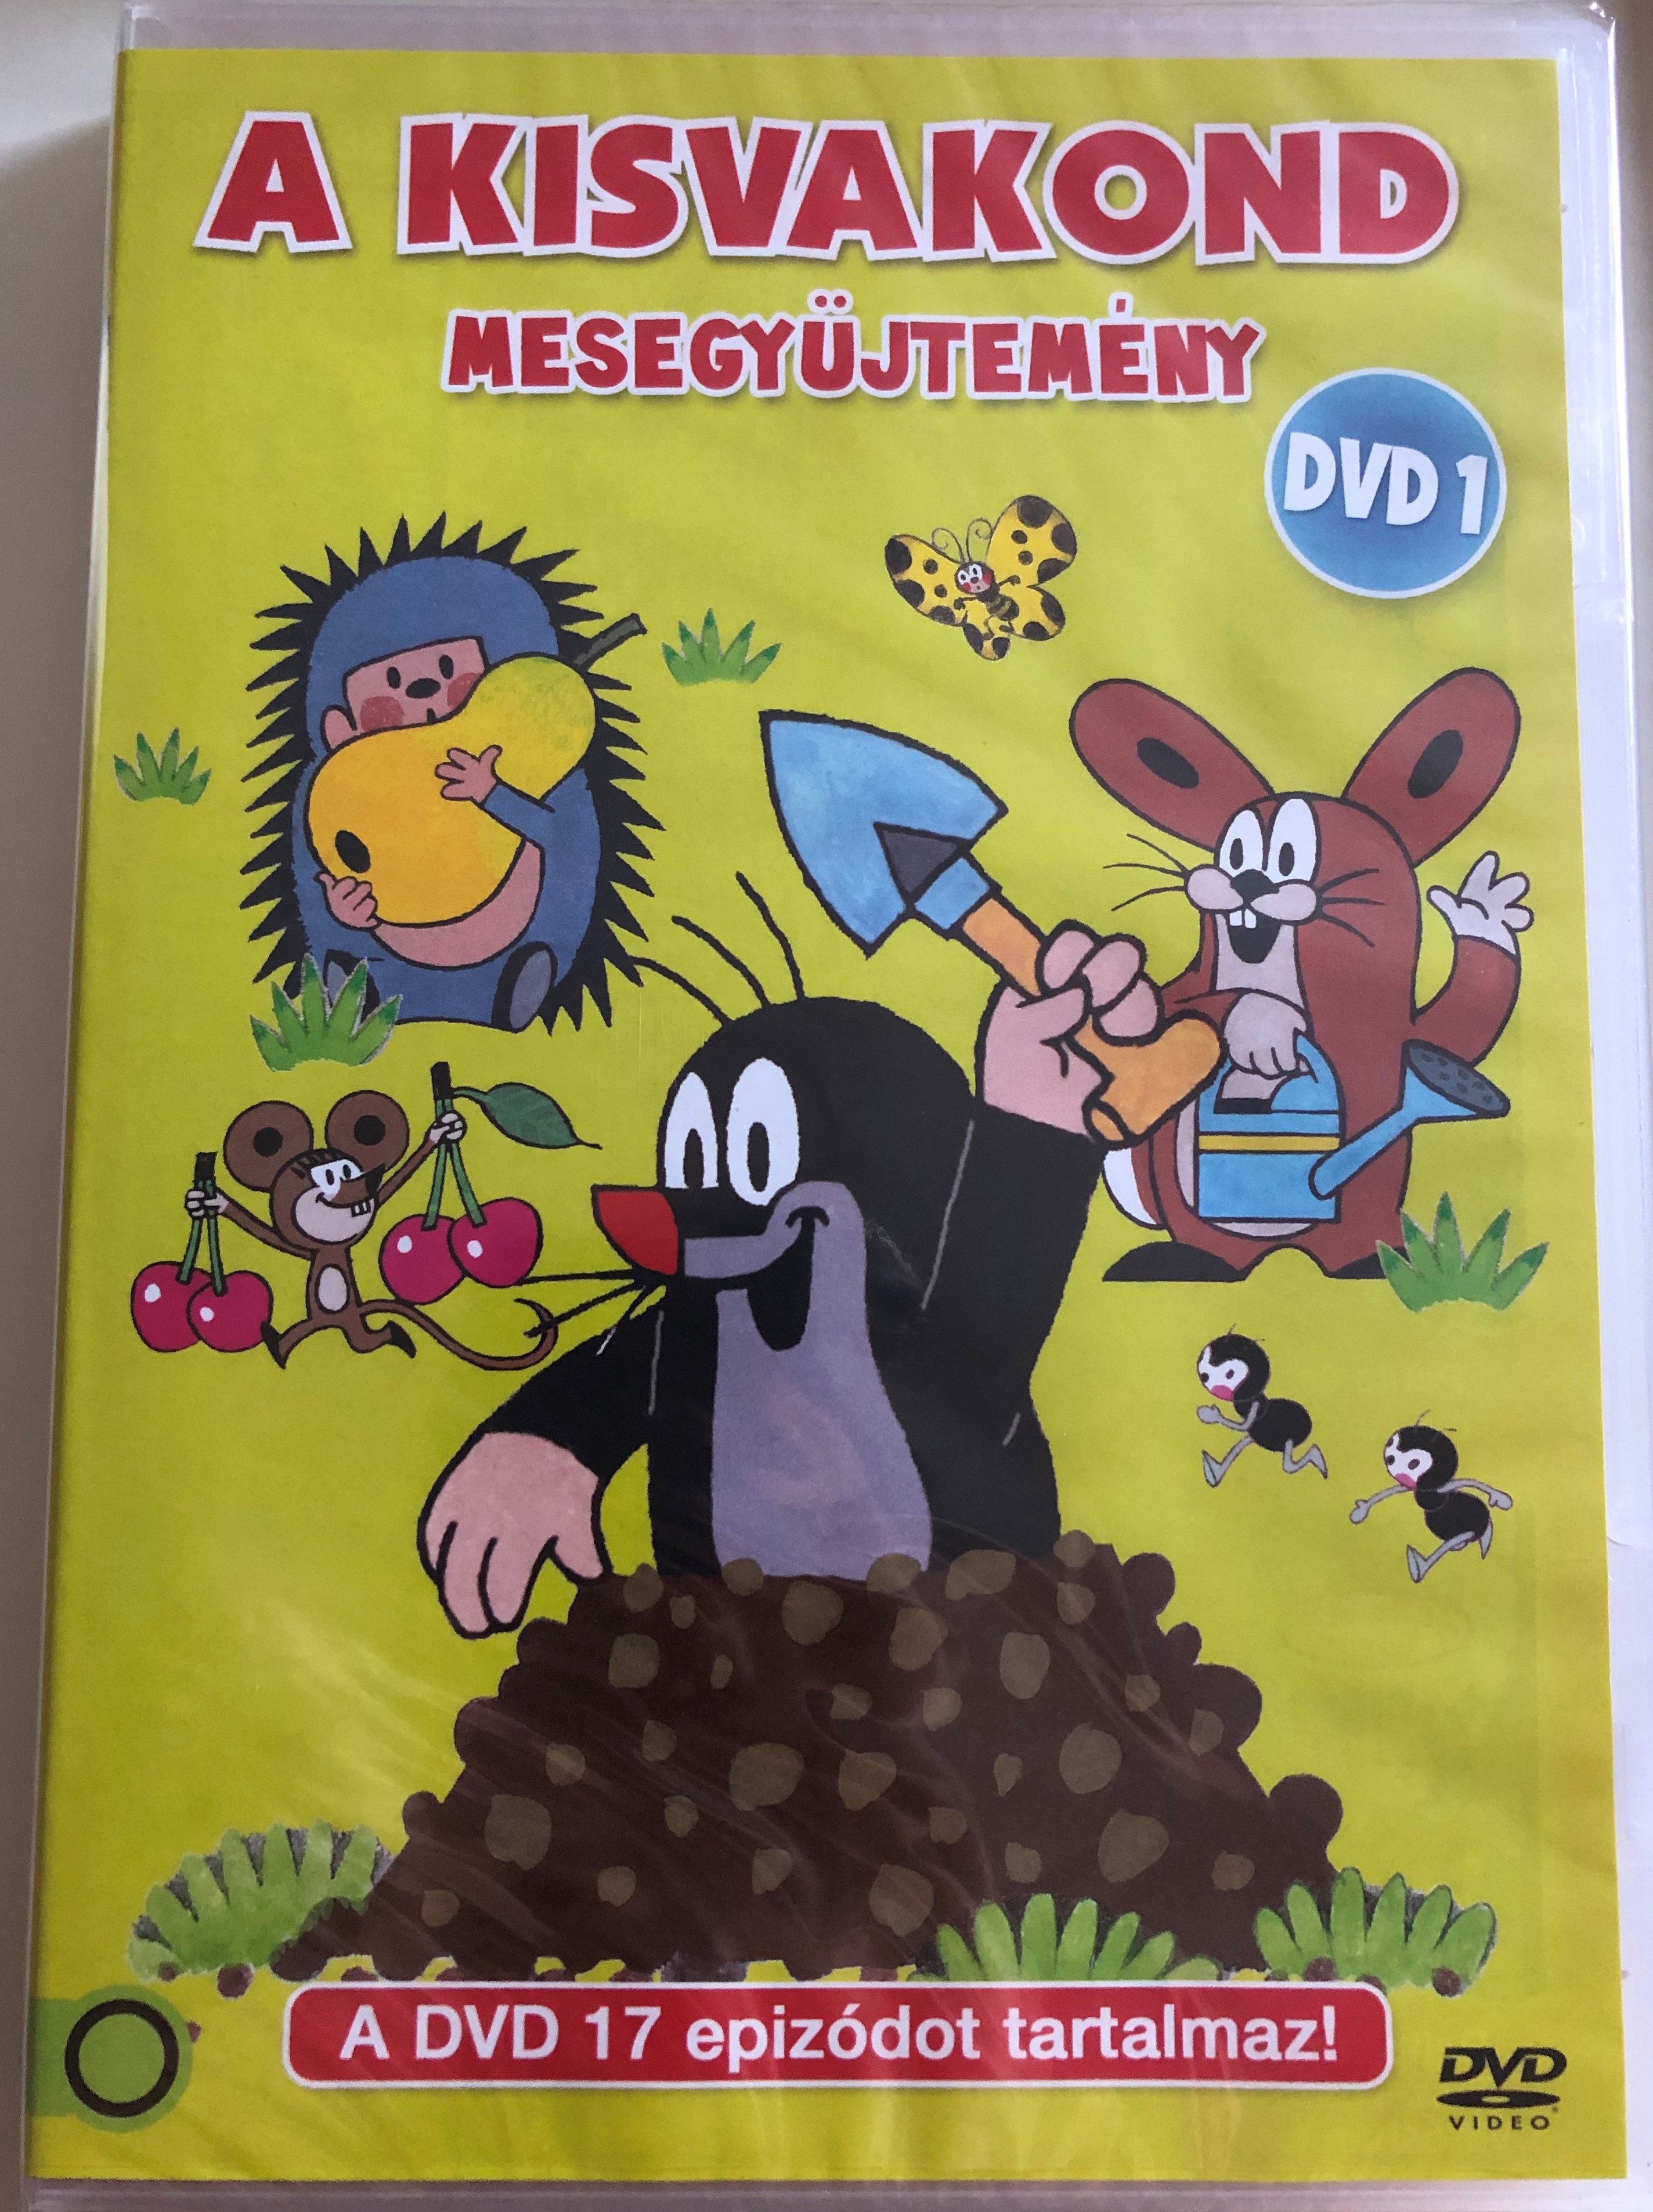 A kisvakond mesegyűjtemény 1. DVD Krtek the Mole collection vol. 1 1